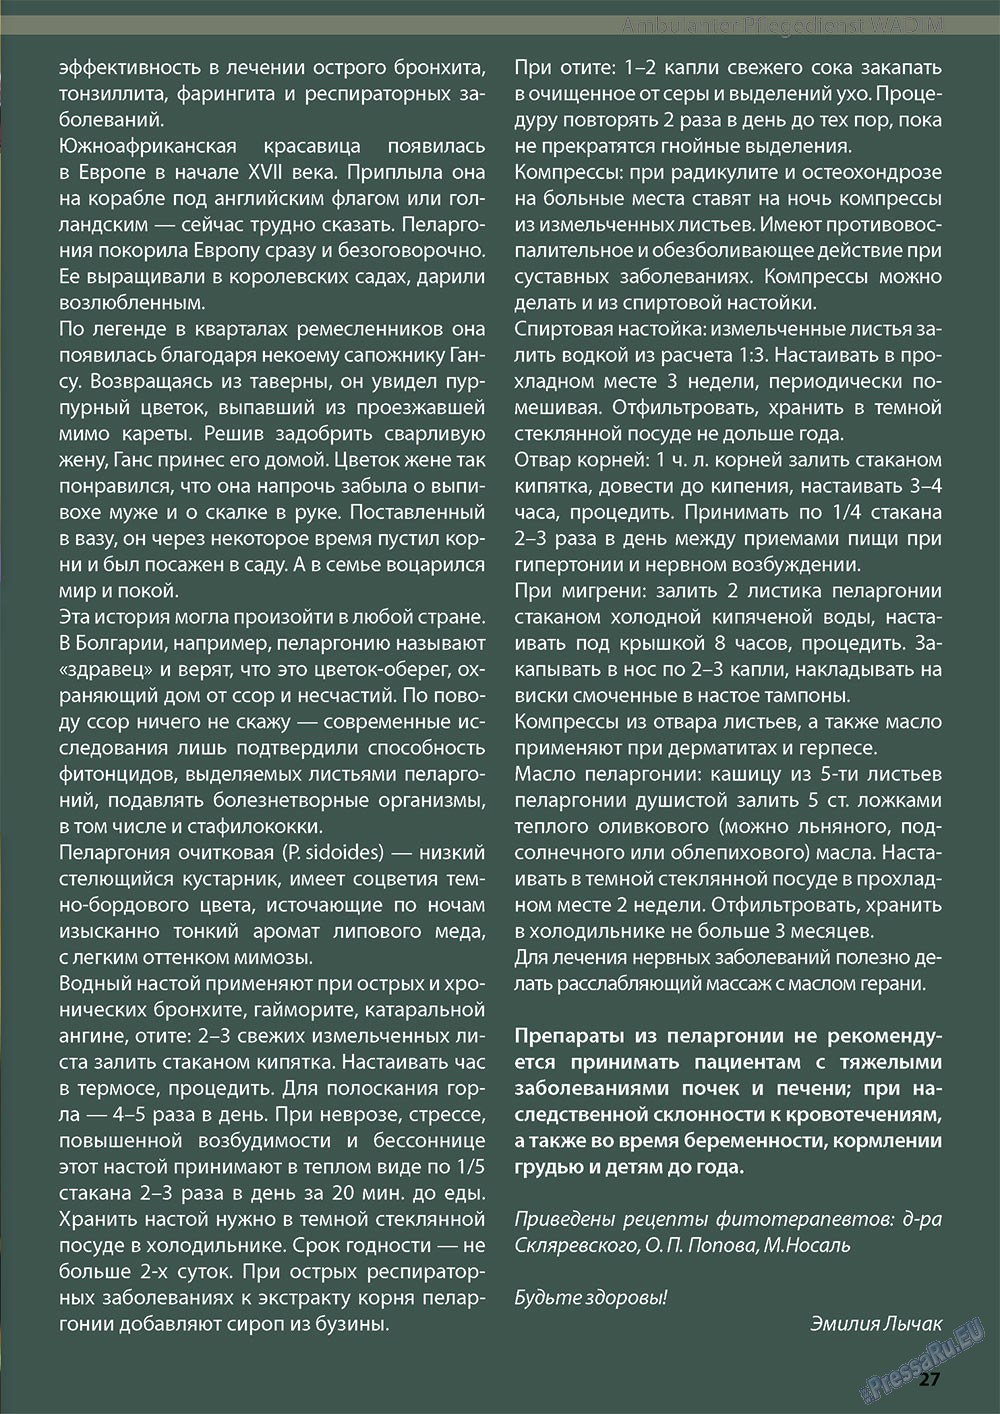 Wadim, журнал. 2013 №2 стр.27